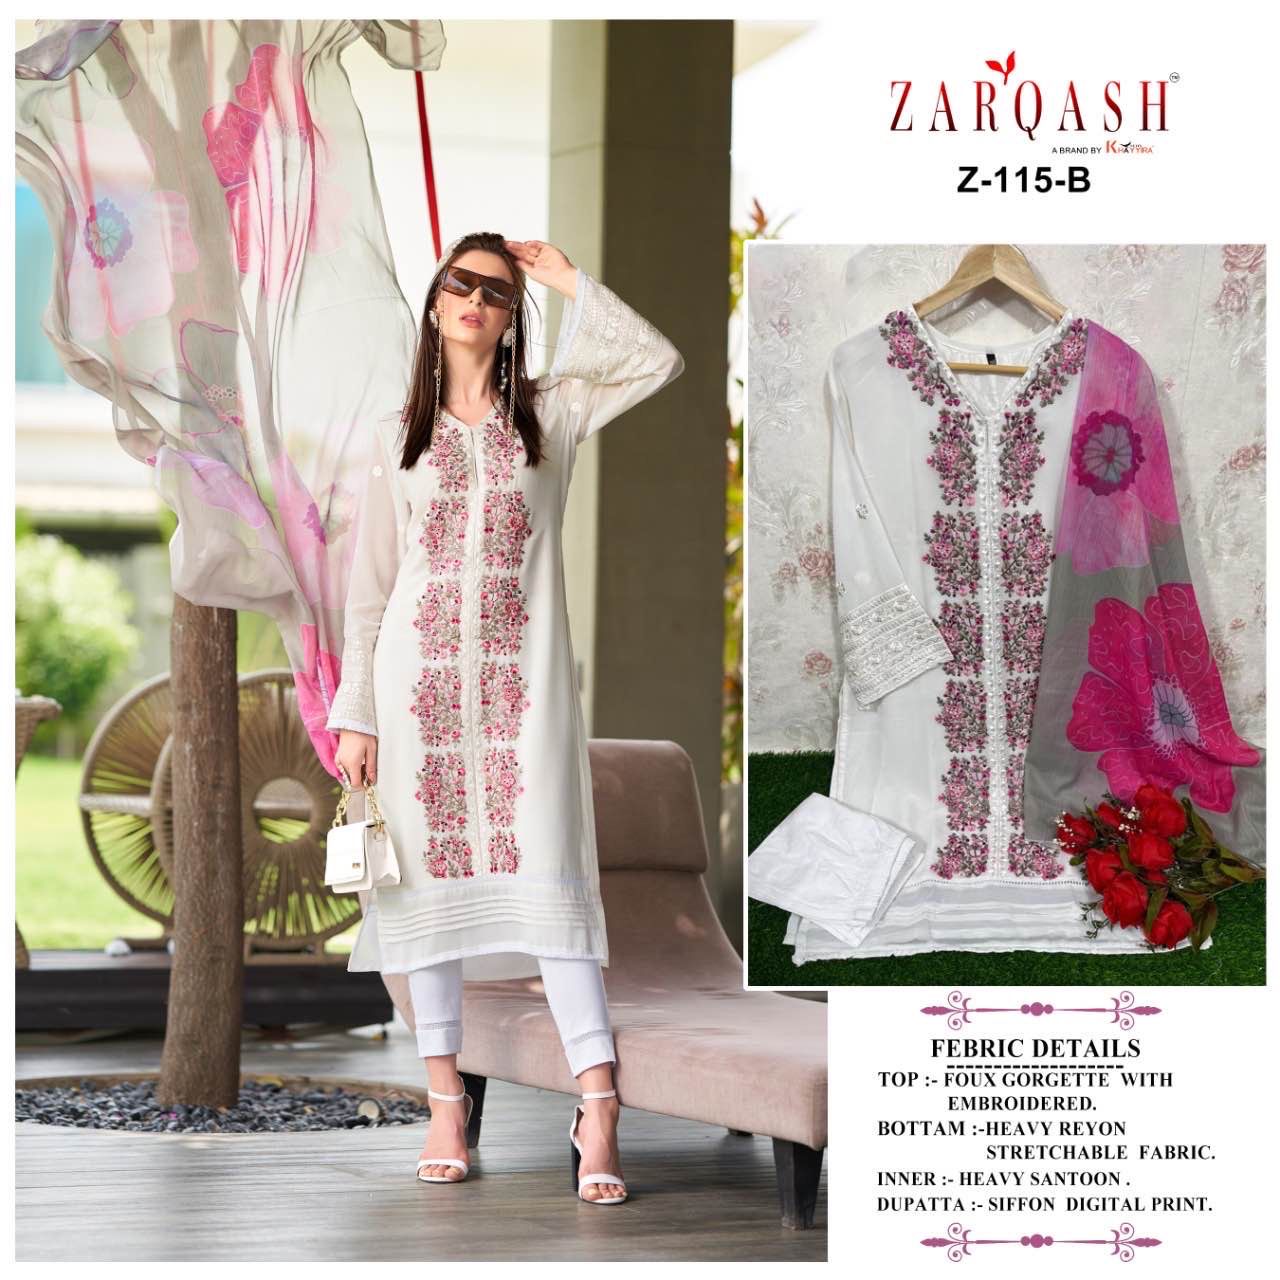 Zarqash Z 115 collection 2